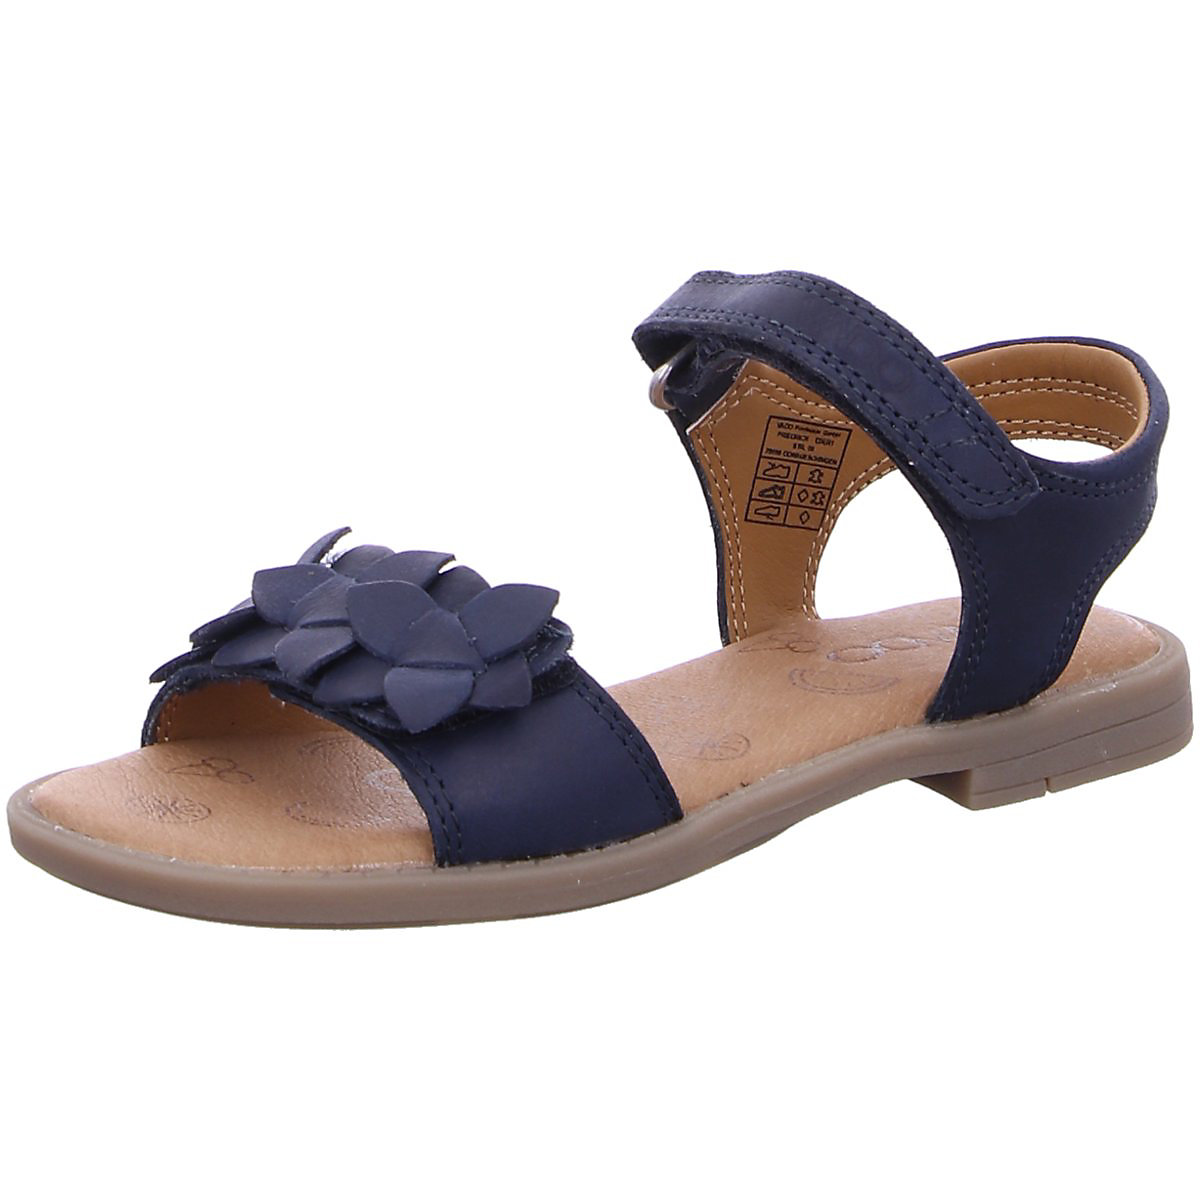 VADO Mädchen Sandalen Schuhe Anna Sandale Kinderschuhe Glattleder uni Sandalen blau Modell 1